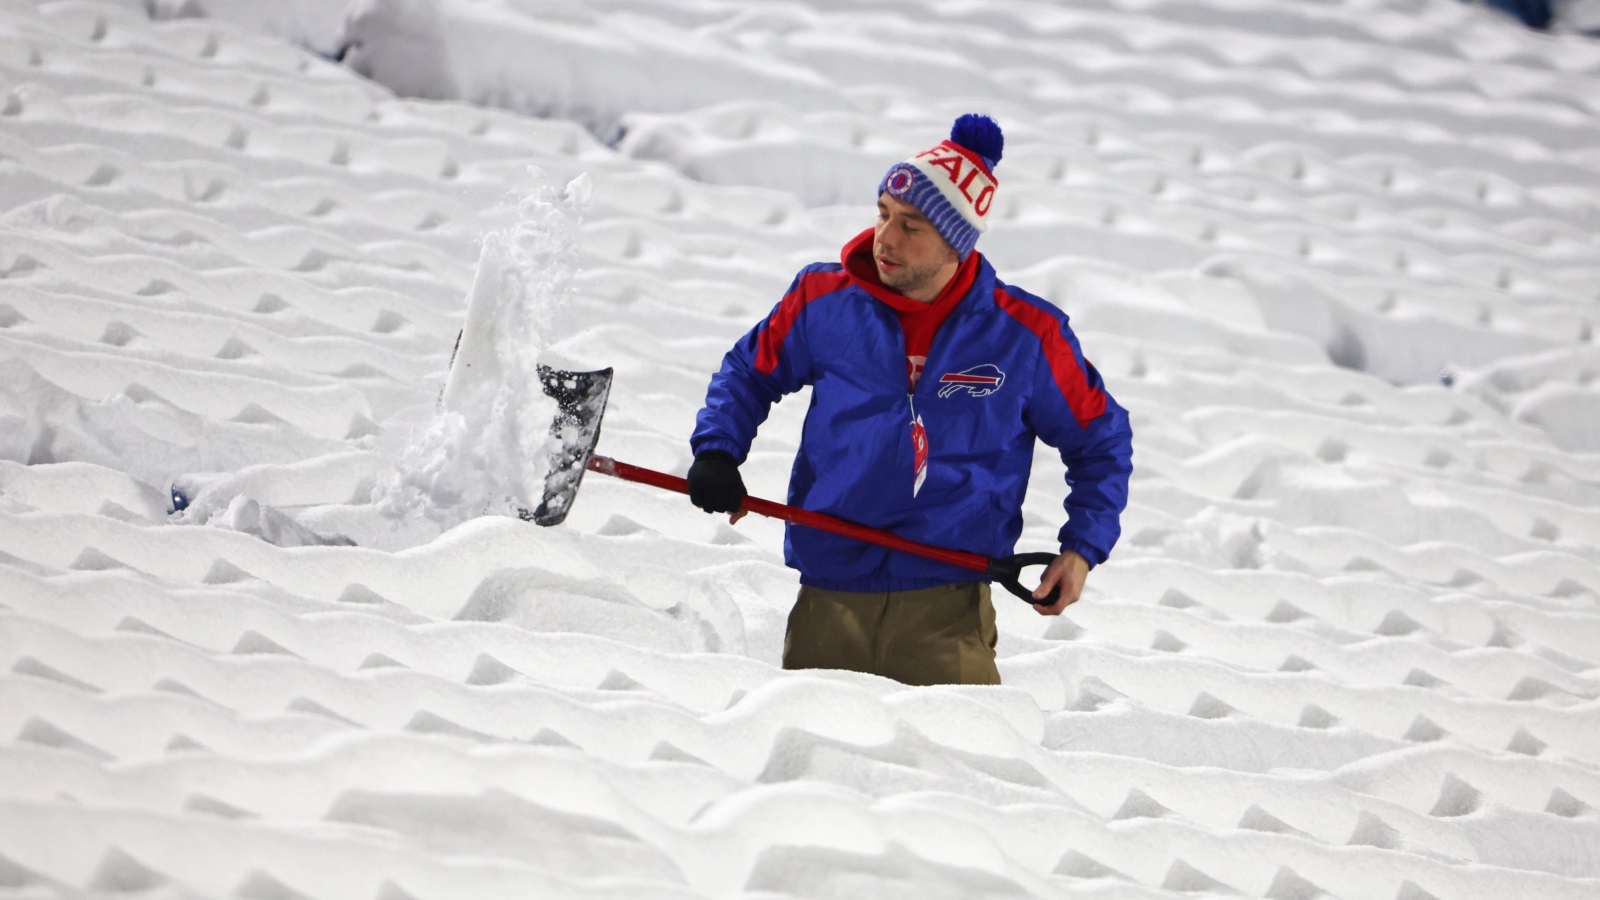 Buffalo Bills fans shoveling snow